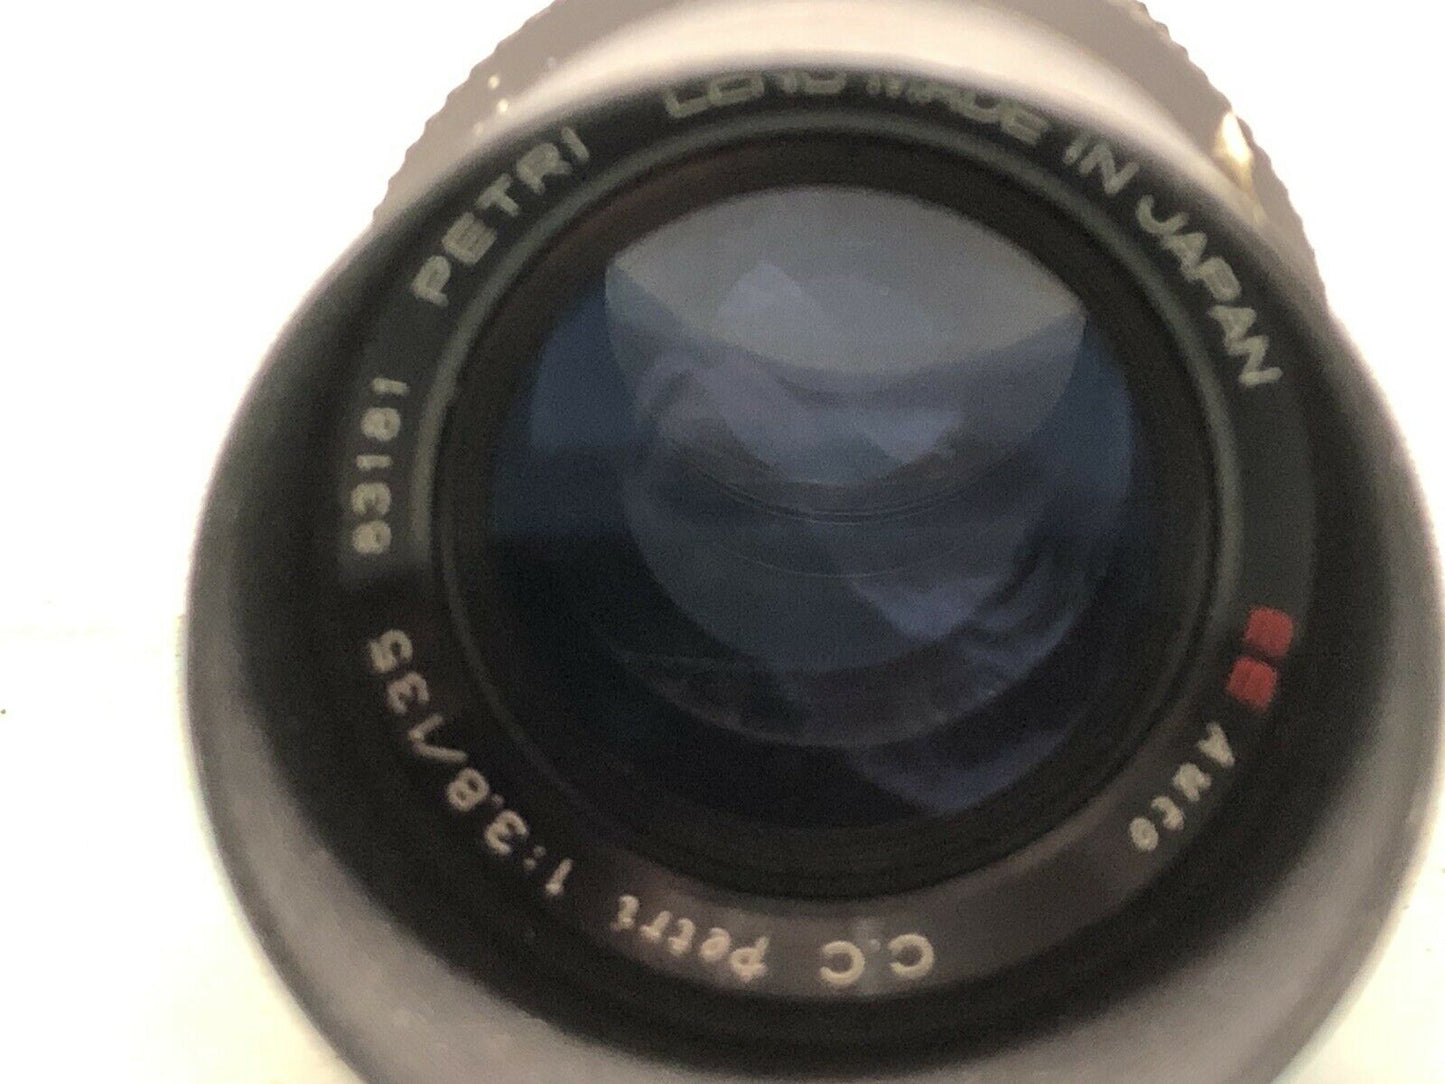 Vintage Camera Lense